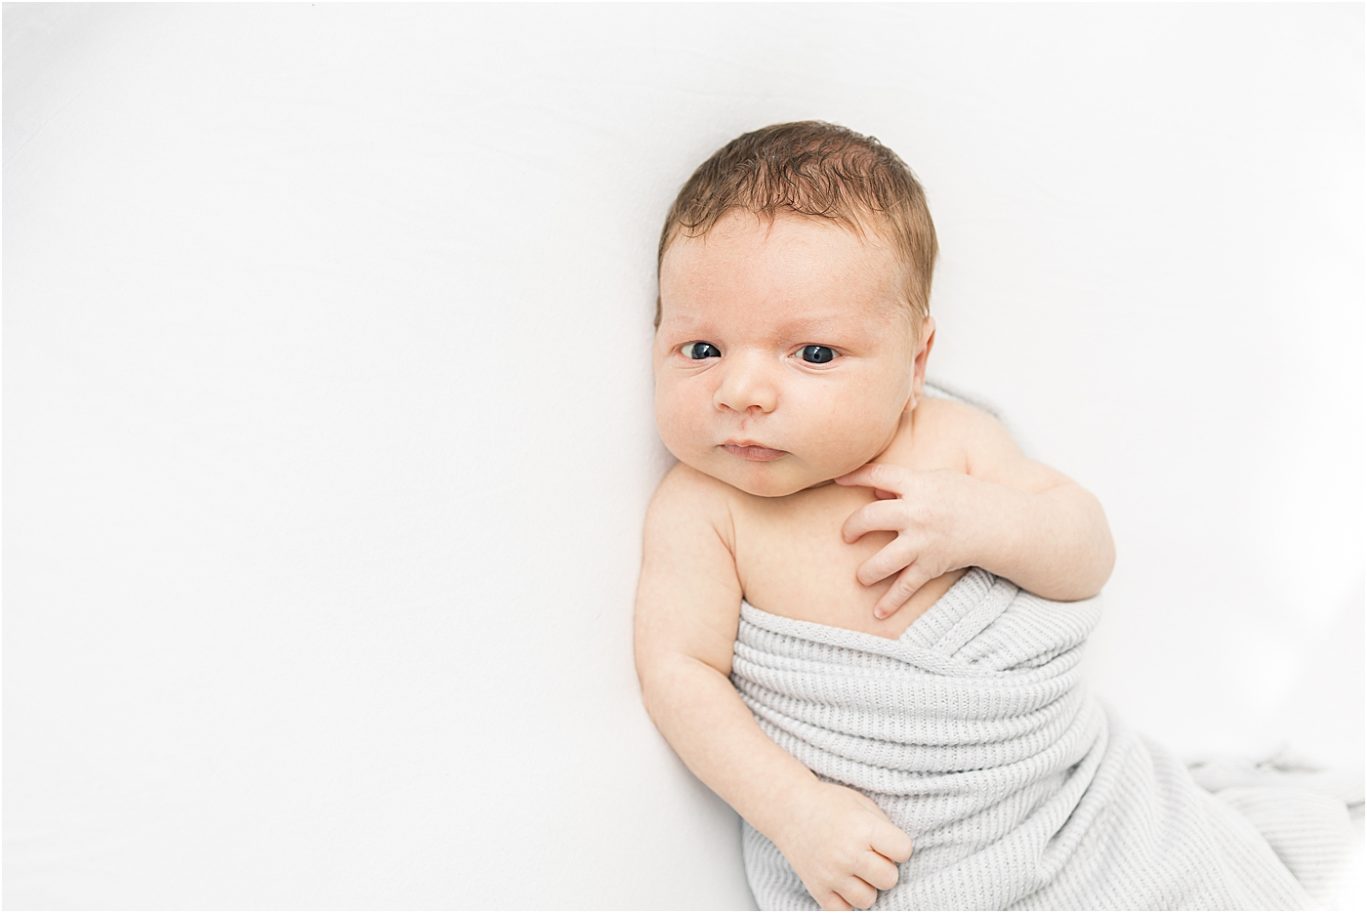 Newborn baby boy awake for photos | Lindsay Konopa Photography